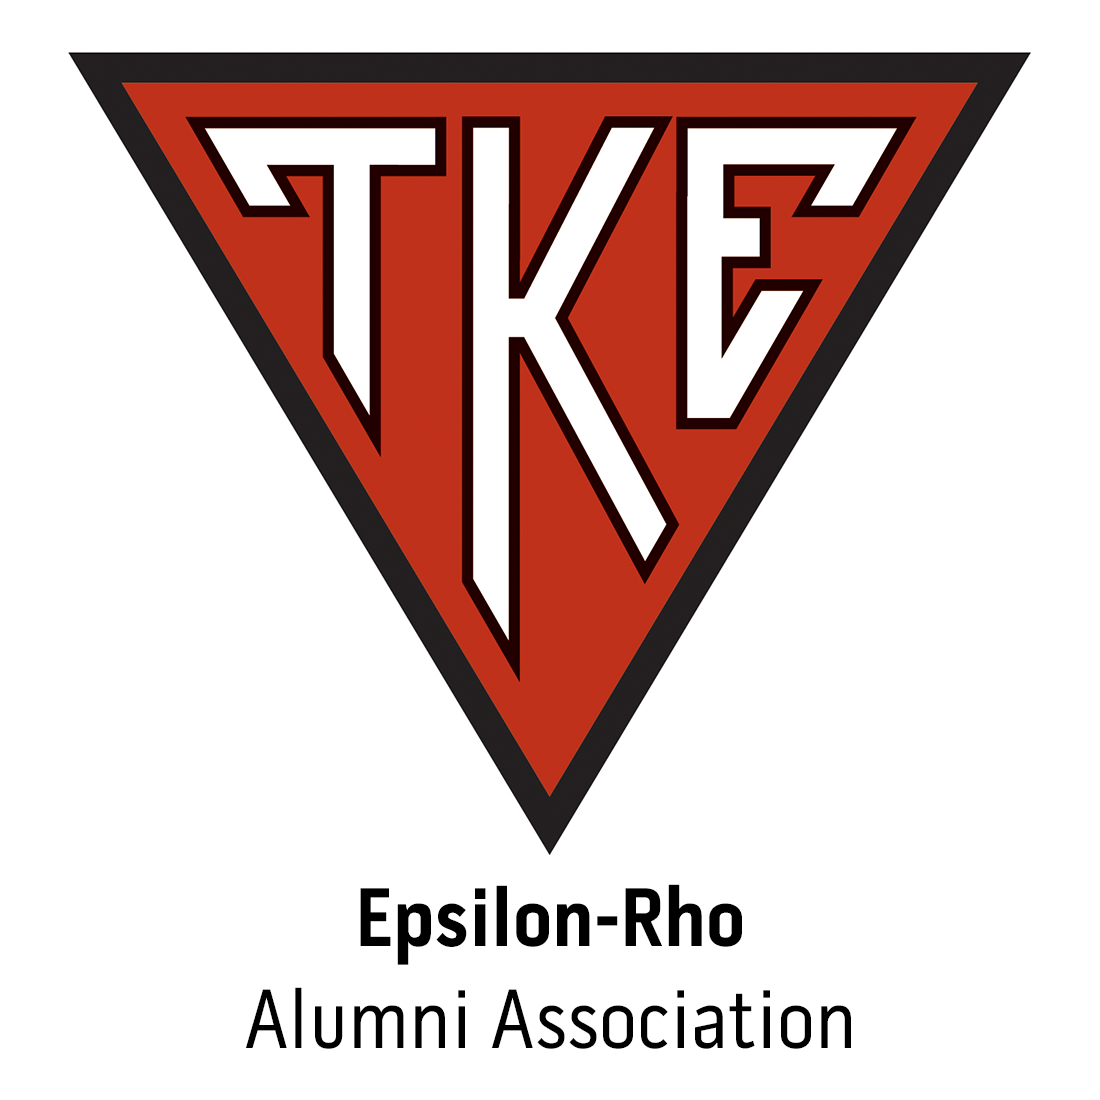 Epsilon-Rho Alumni Association at Northern Arizona University